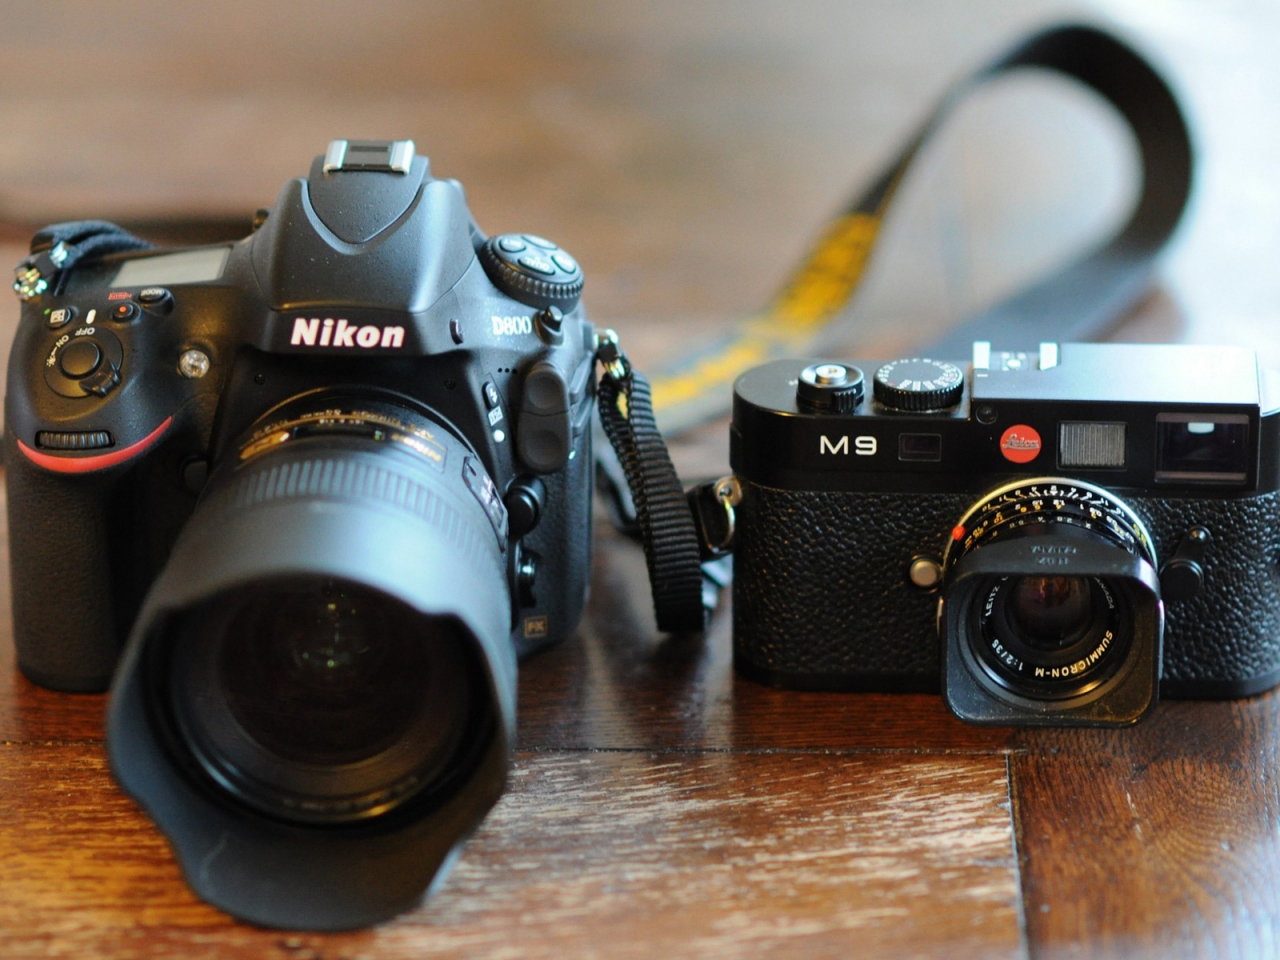 Nikon and Leica for 1280 x 960 resolution